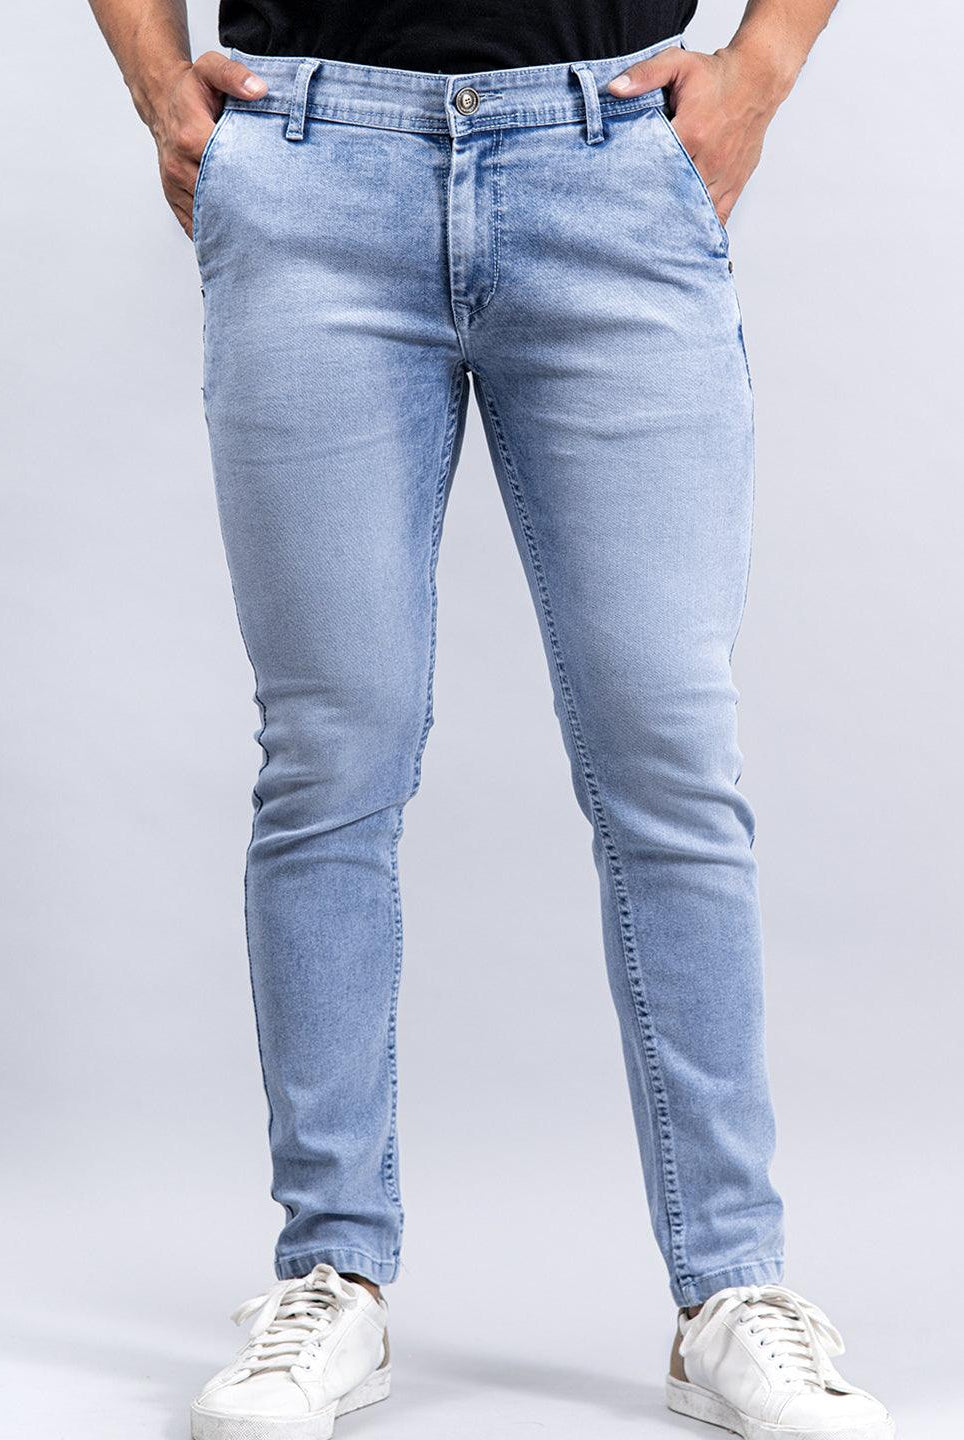 light blue ankle length stretchable mens jeans